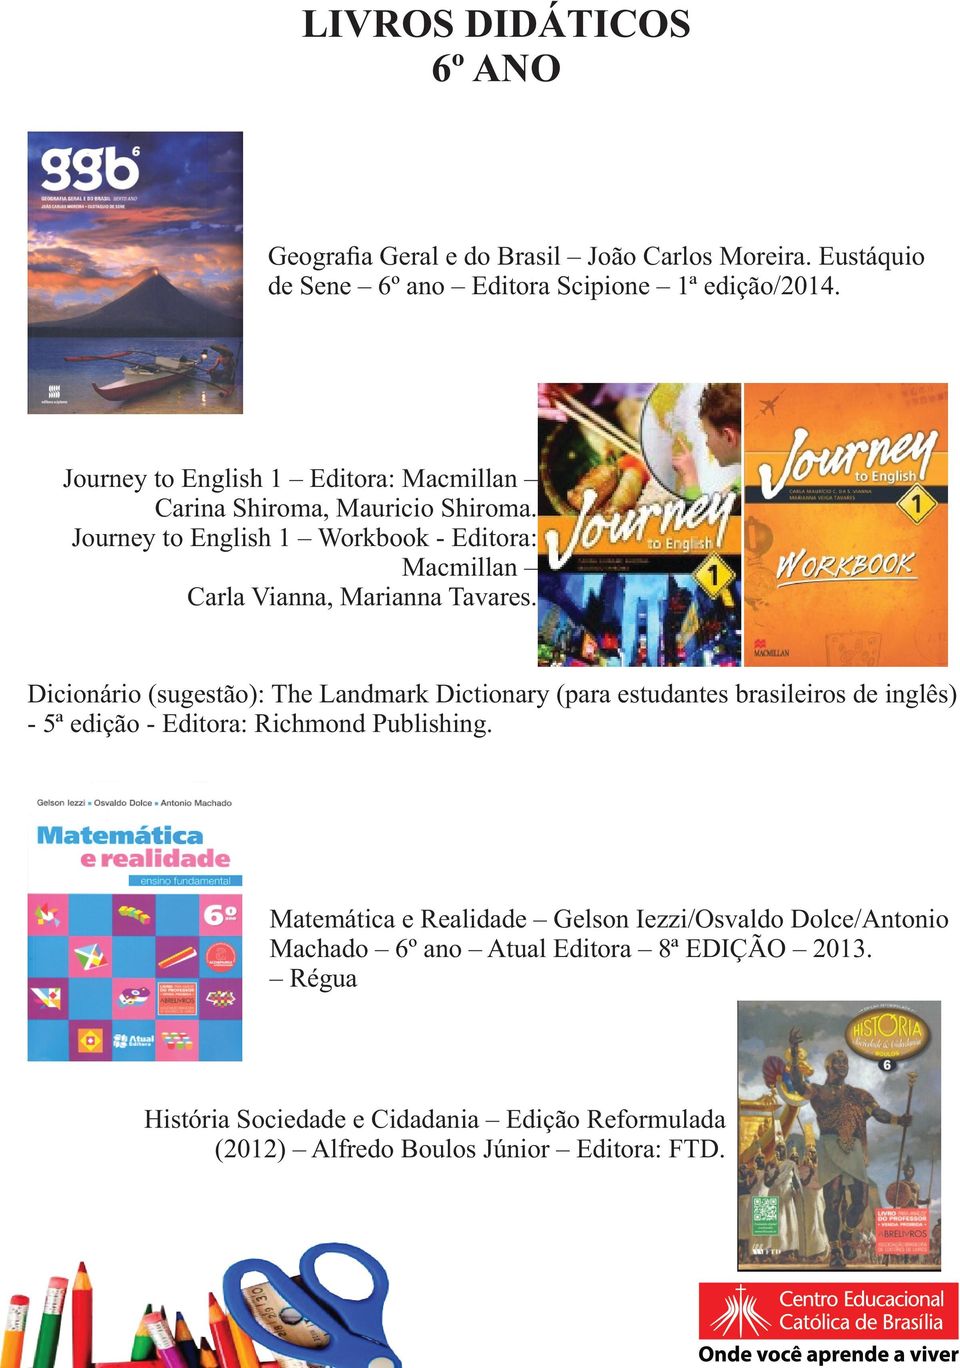 Journey to English 1 Workbook - Editora: Macmillan Carla Vianna, Marianna Tavares.